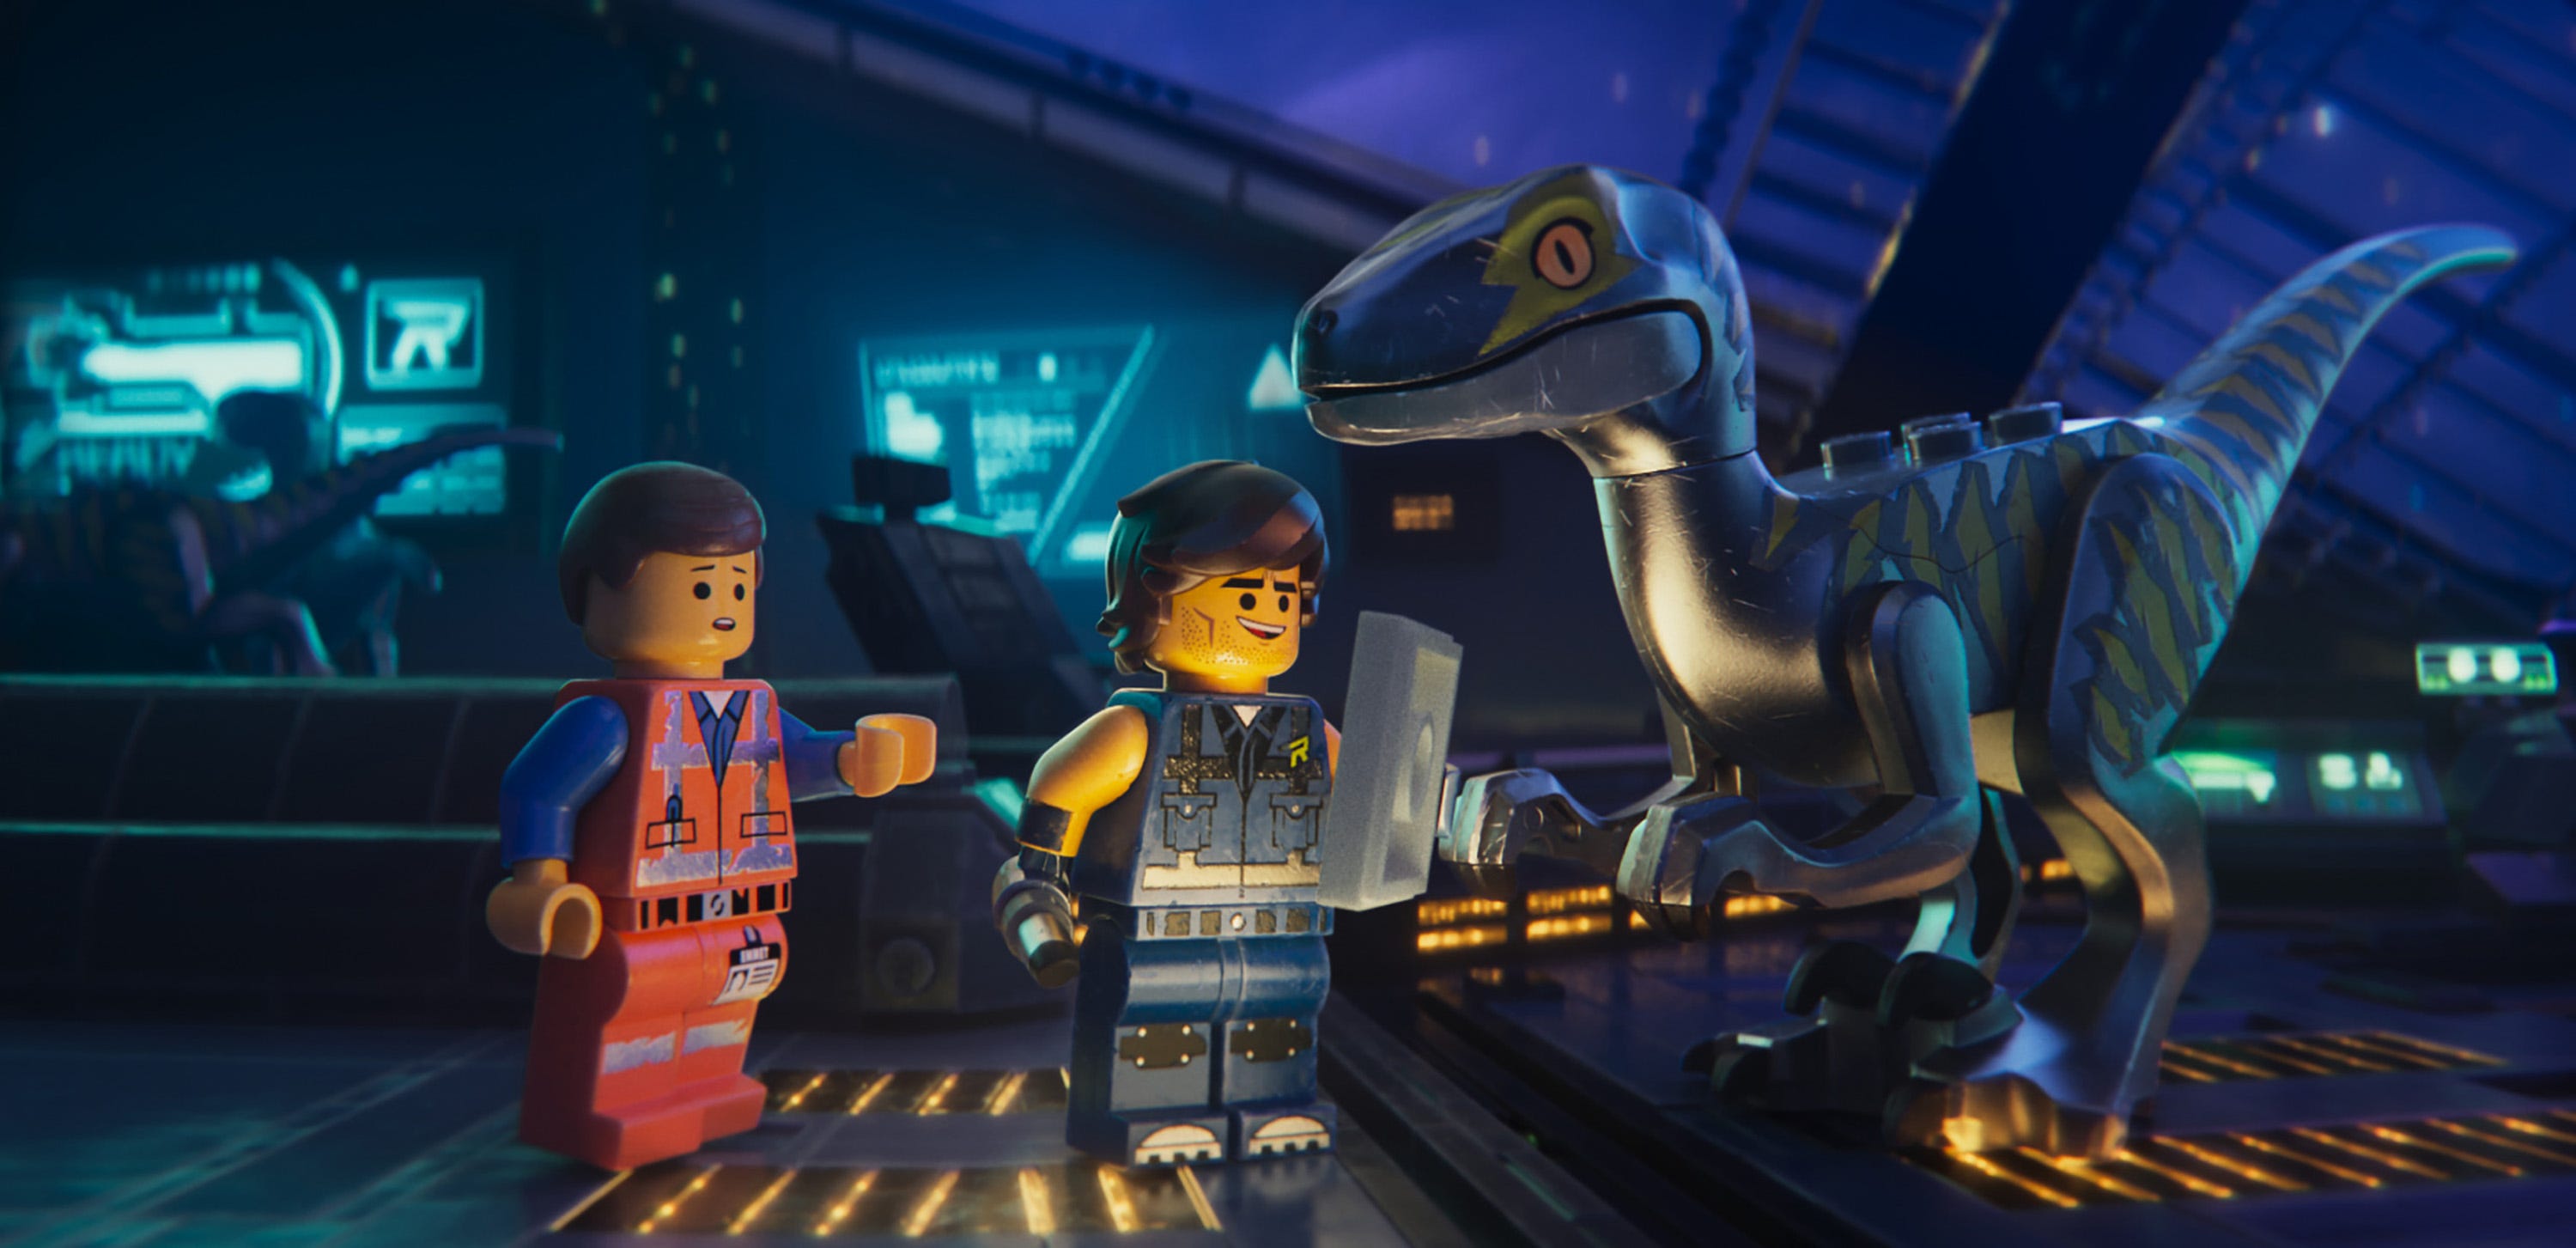 The Lego Movie 2': Every 'Lego' movie 